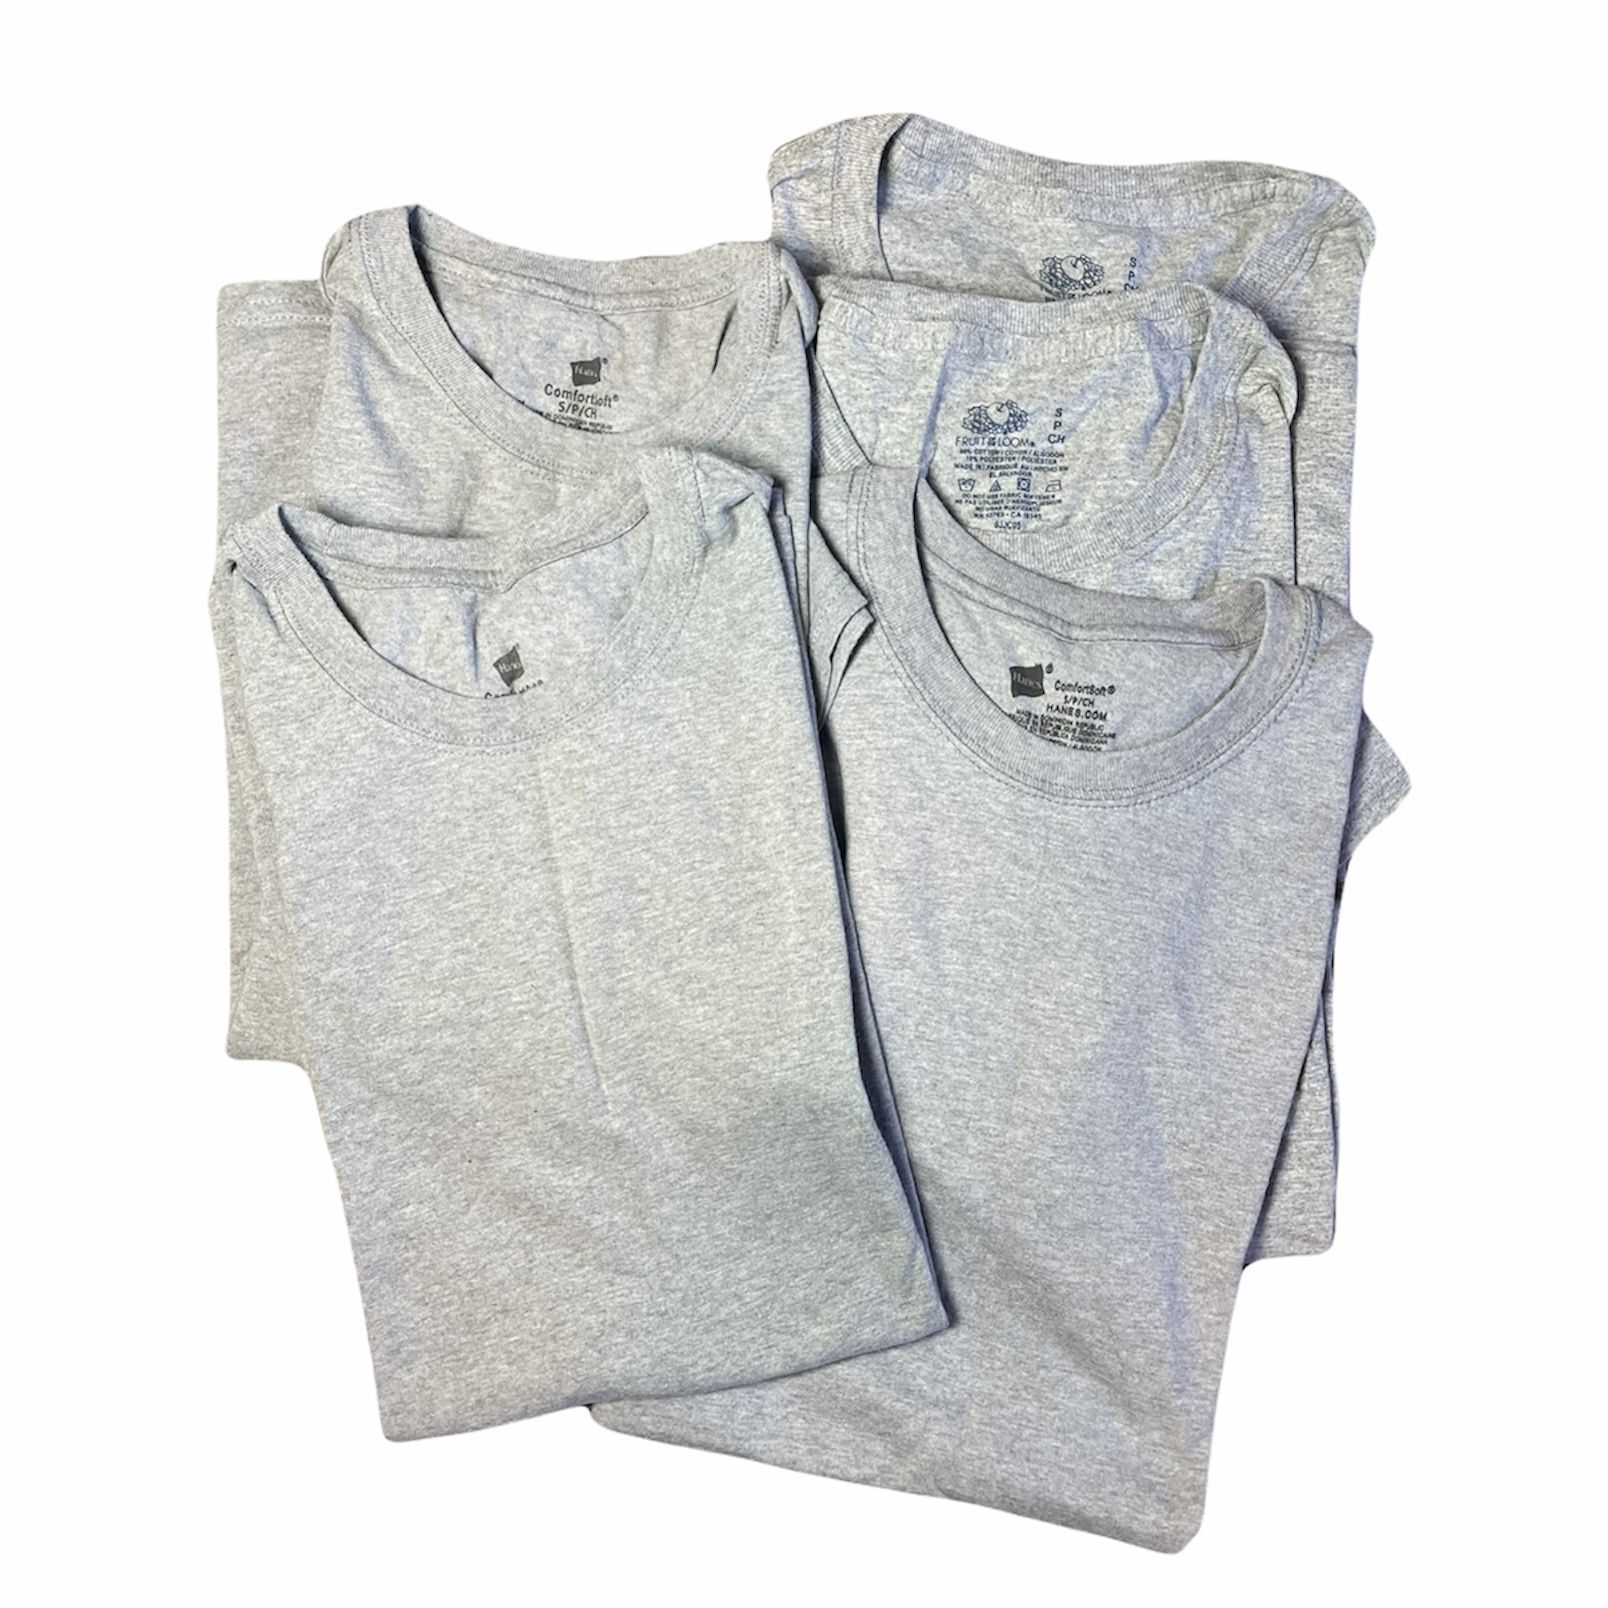 Bundle of 5 Men’s S Heather Grey Plain T Shirts New